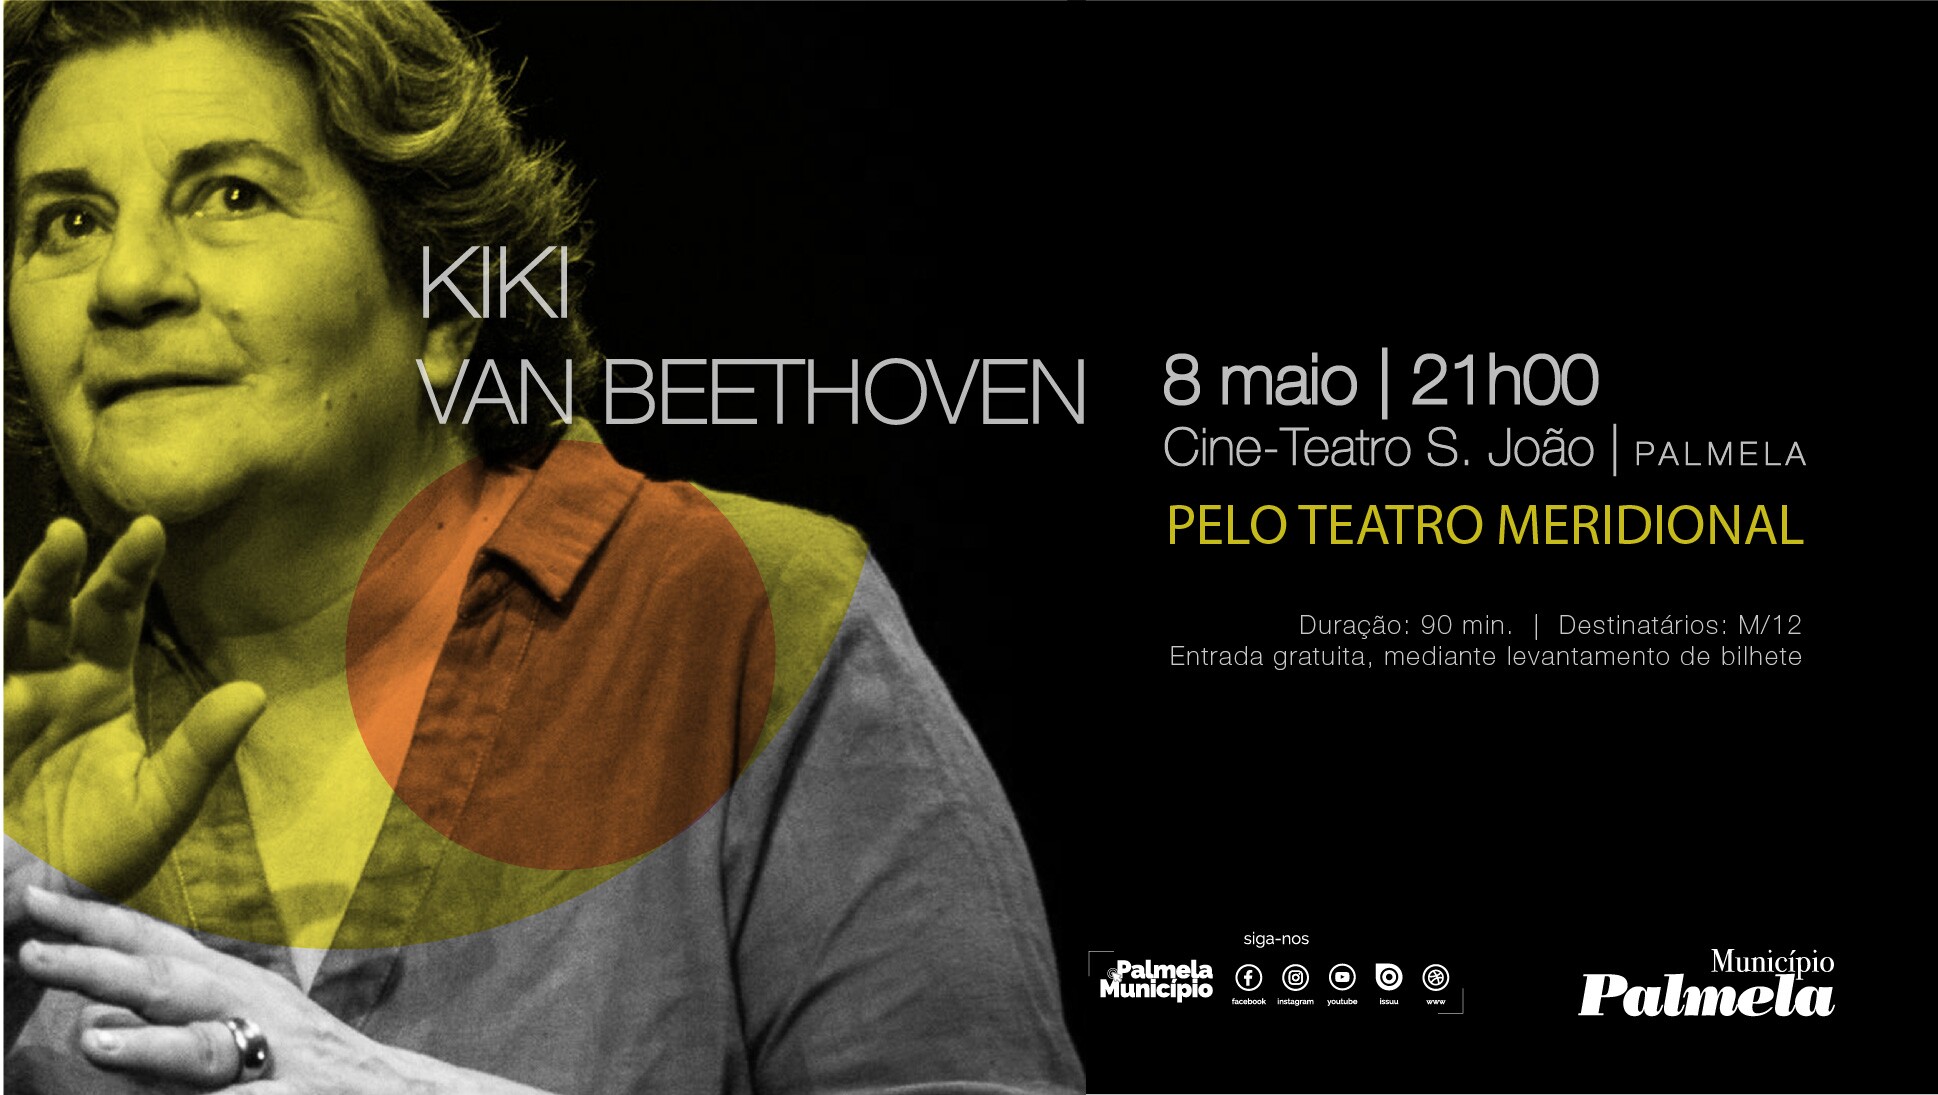 Teatro Meridional leva “Kiki Van Beethoven” ao Cine-Teatro S. João